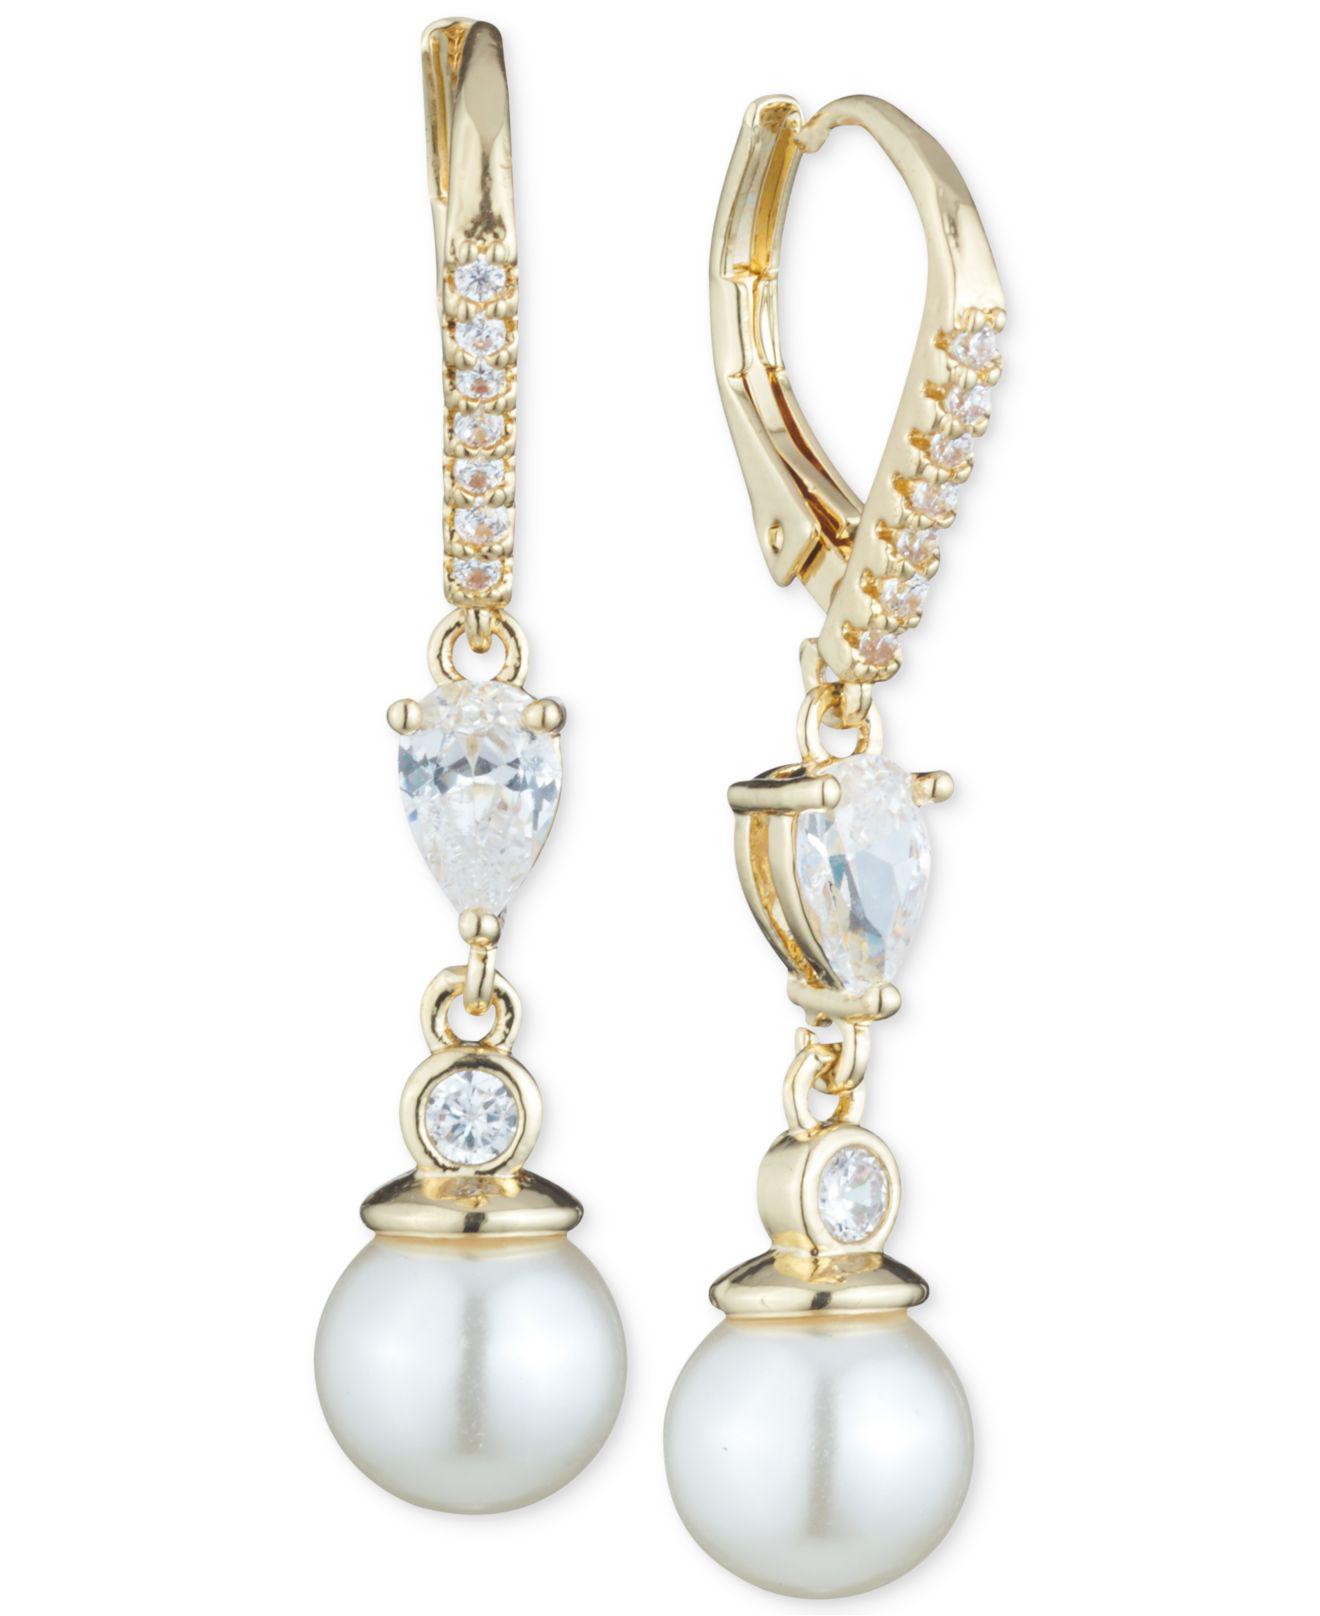 Lyst - Anne Klein Imitation Pearl And Crystal Drop Earrings in Metallic